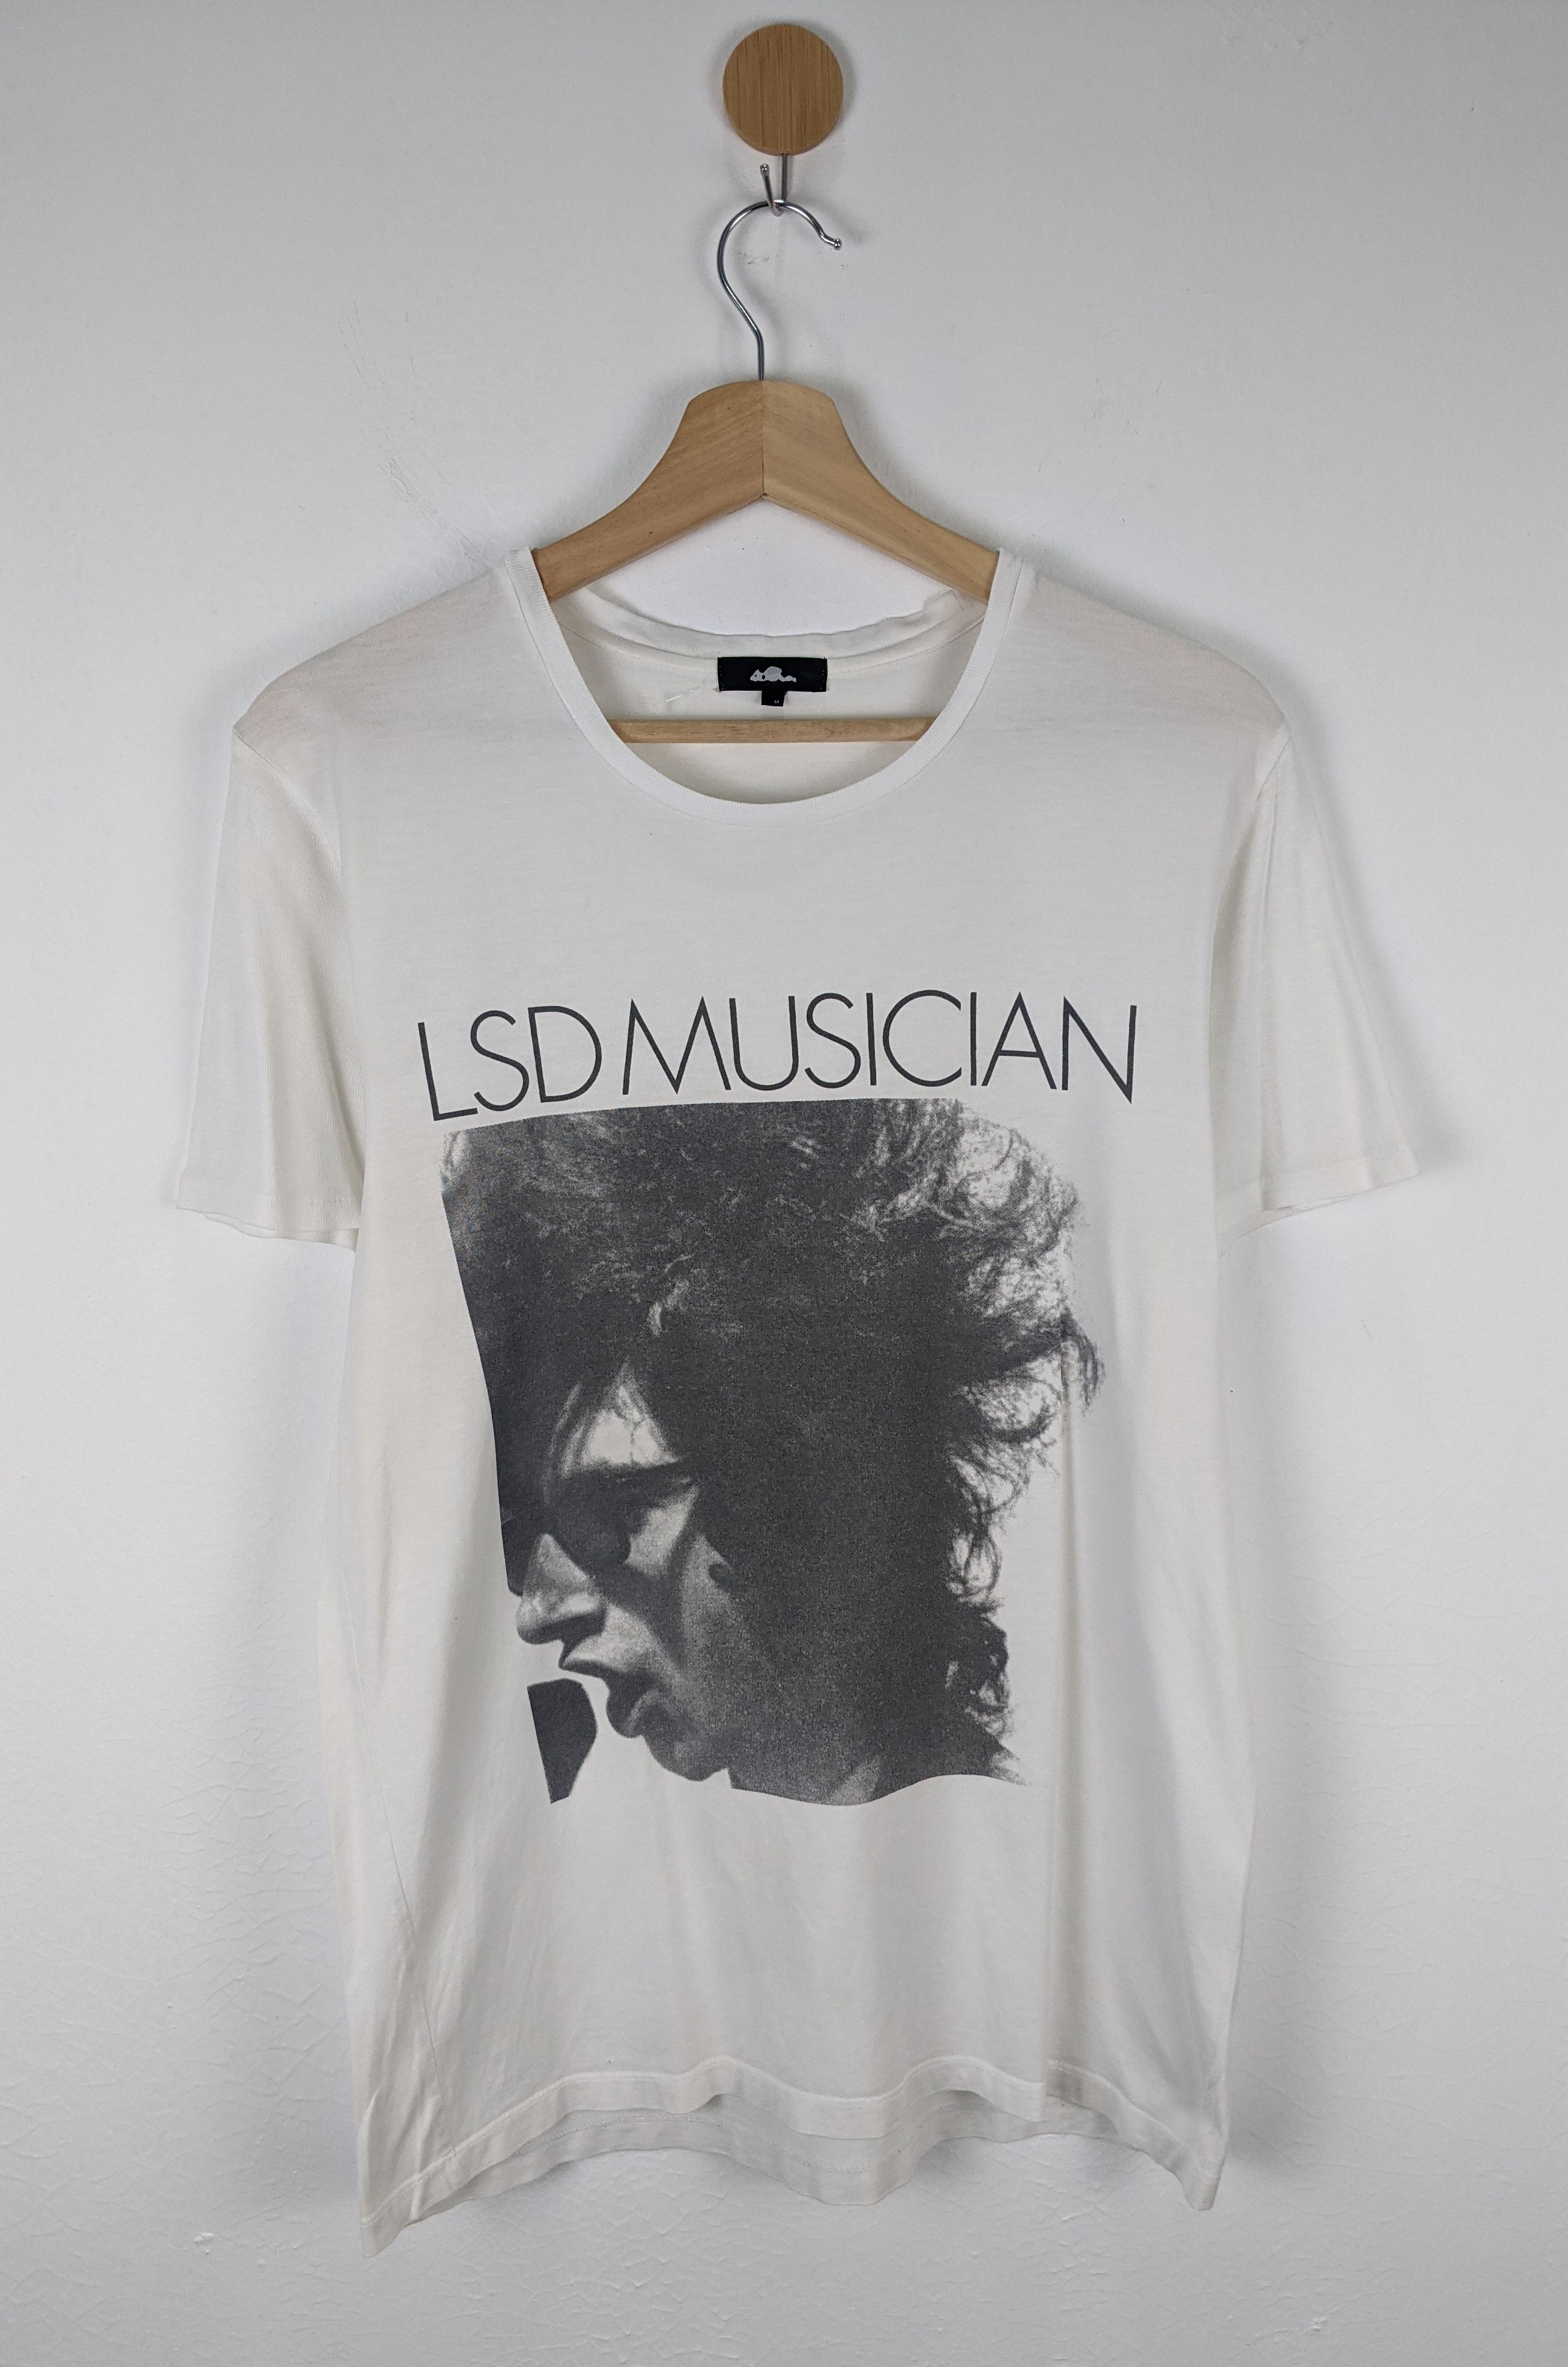 Lad Musician LSD Musician Bob Dylan shirt - 1